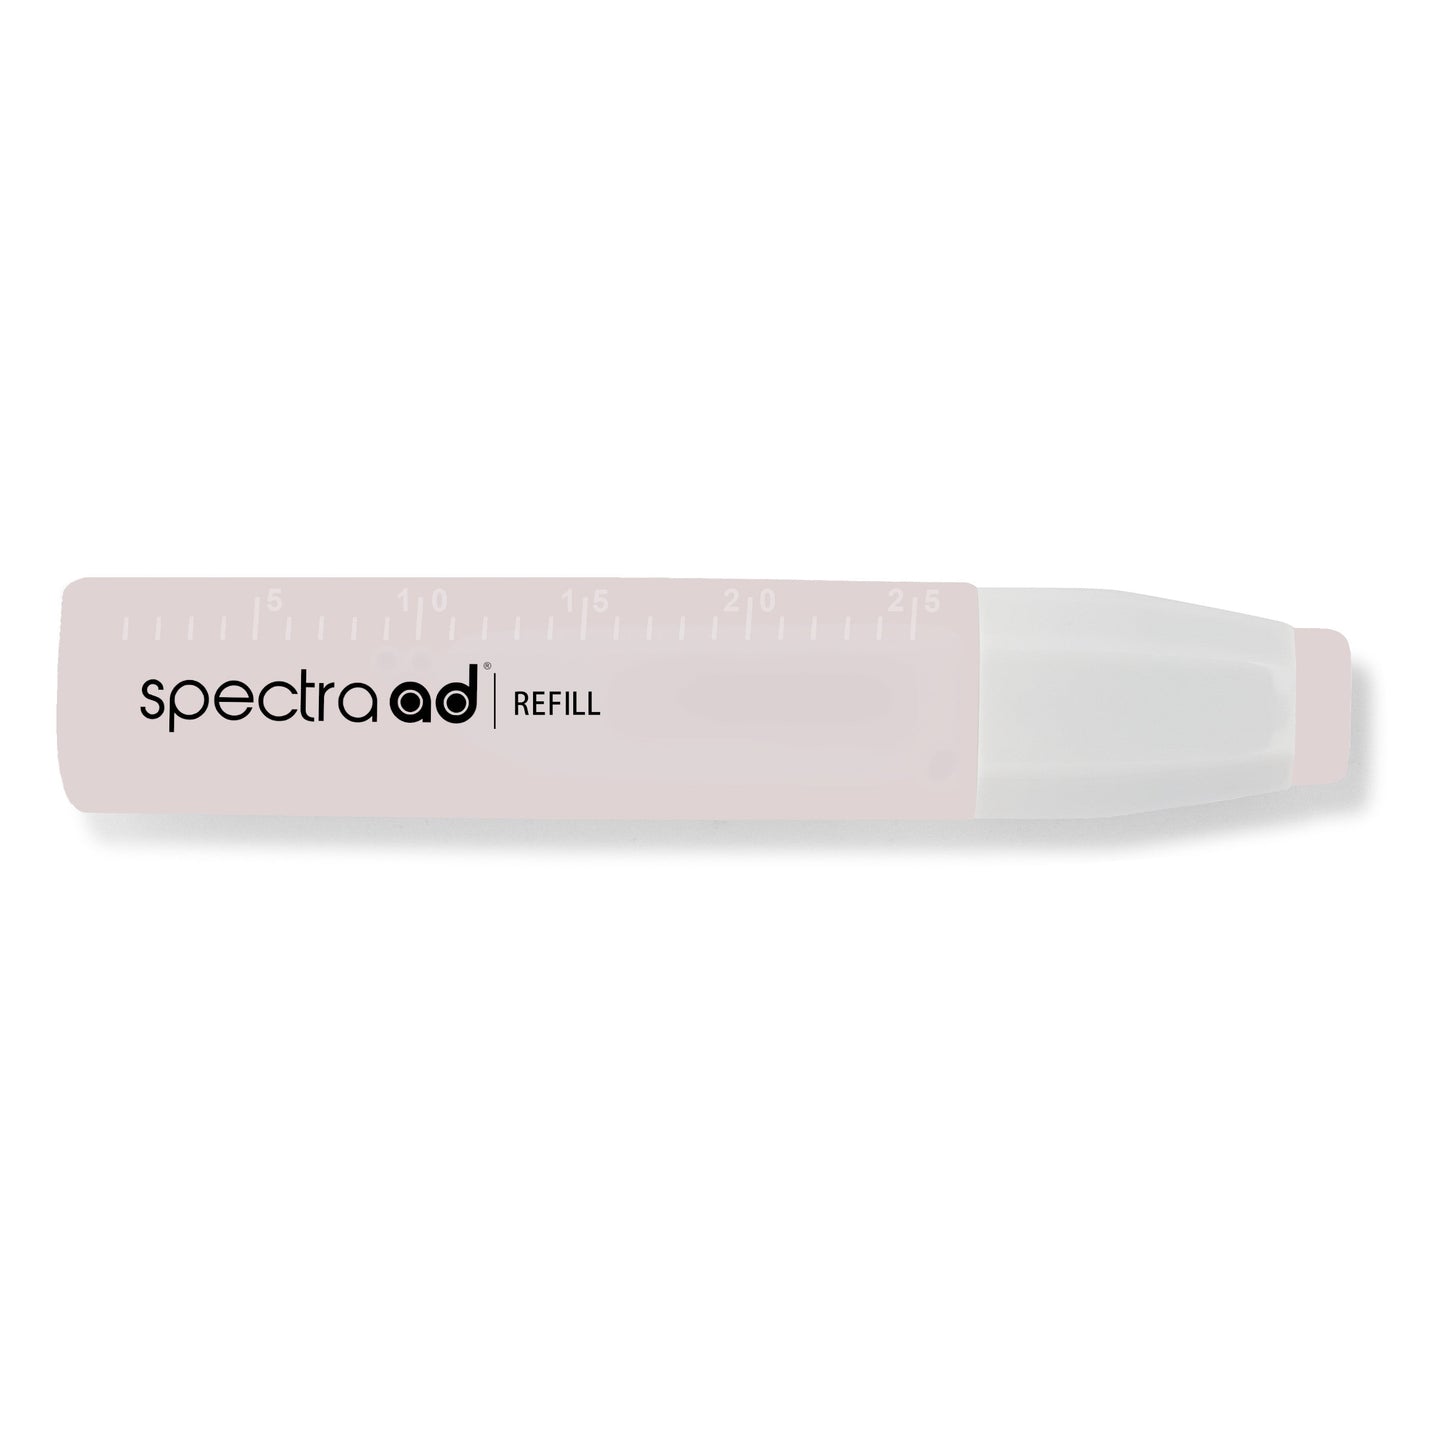 057 - Warm Gray 50% - Spectra AD Refill Bottle